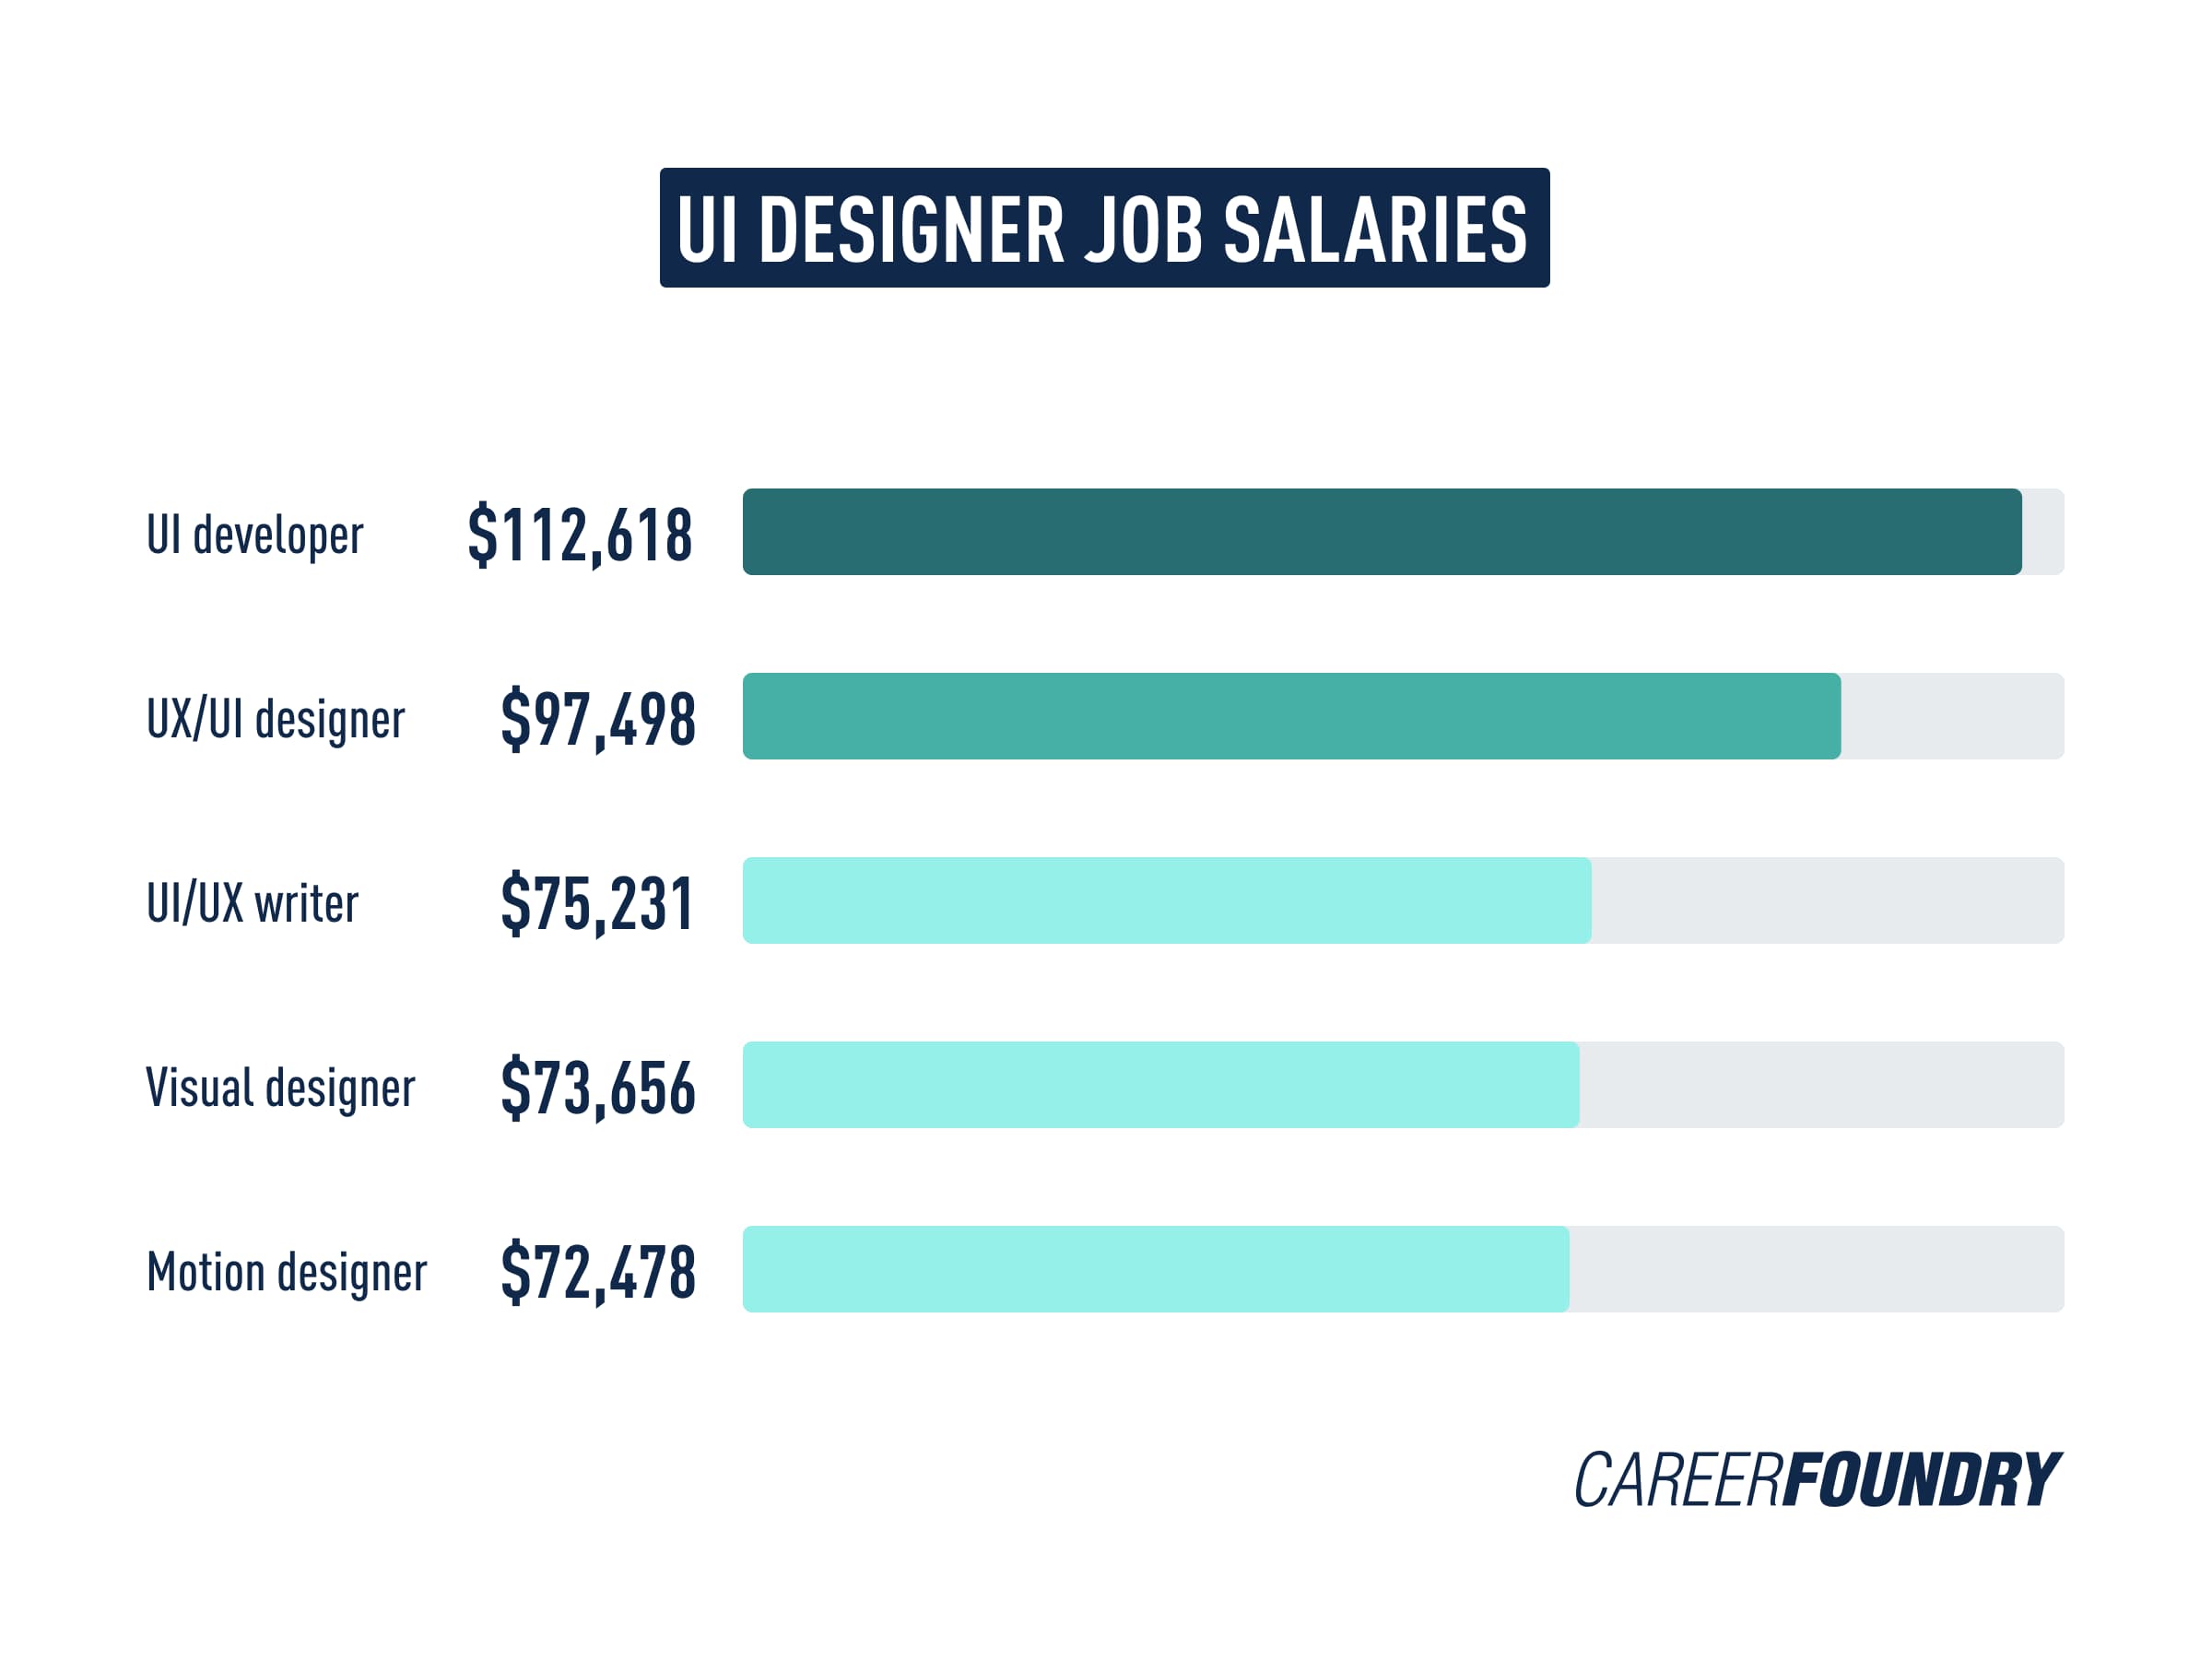 graph showing different UI designer job salaries